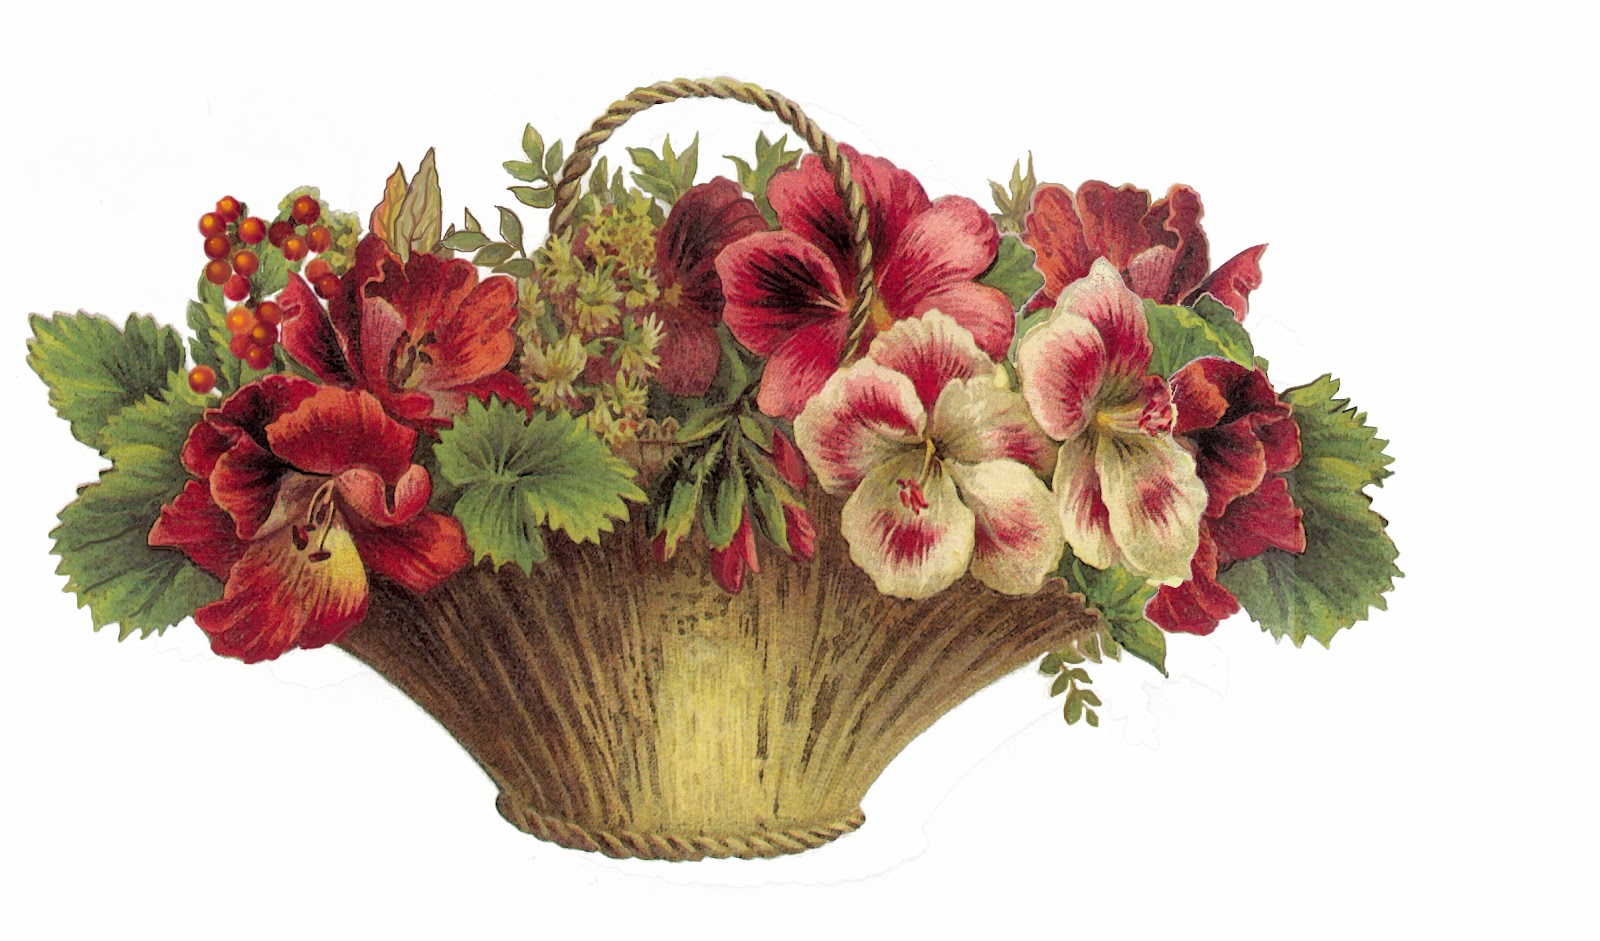 flower basket clipart - photo #27